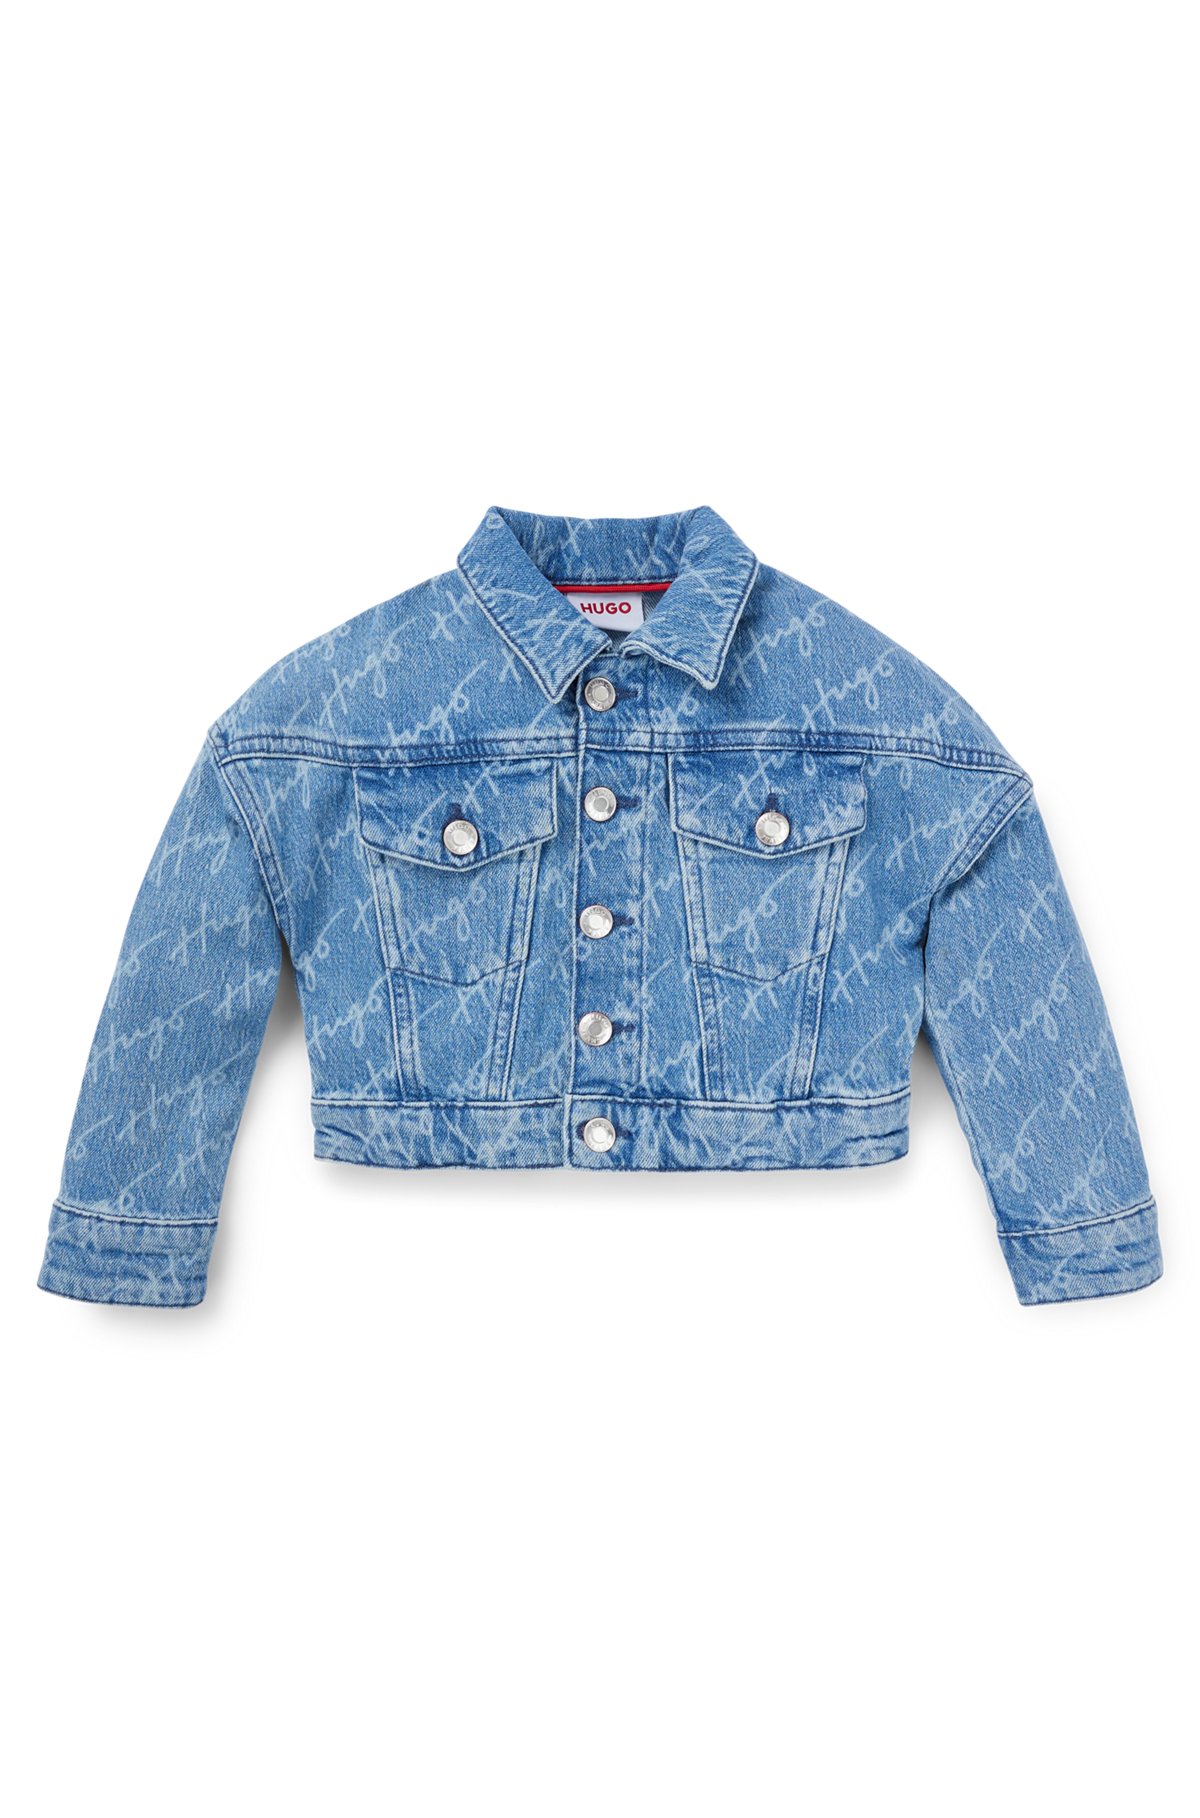 Kids' blue-denim jacket with handwritten logo motif, Patterned